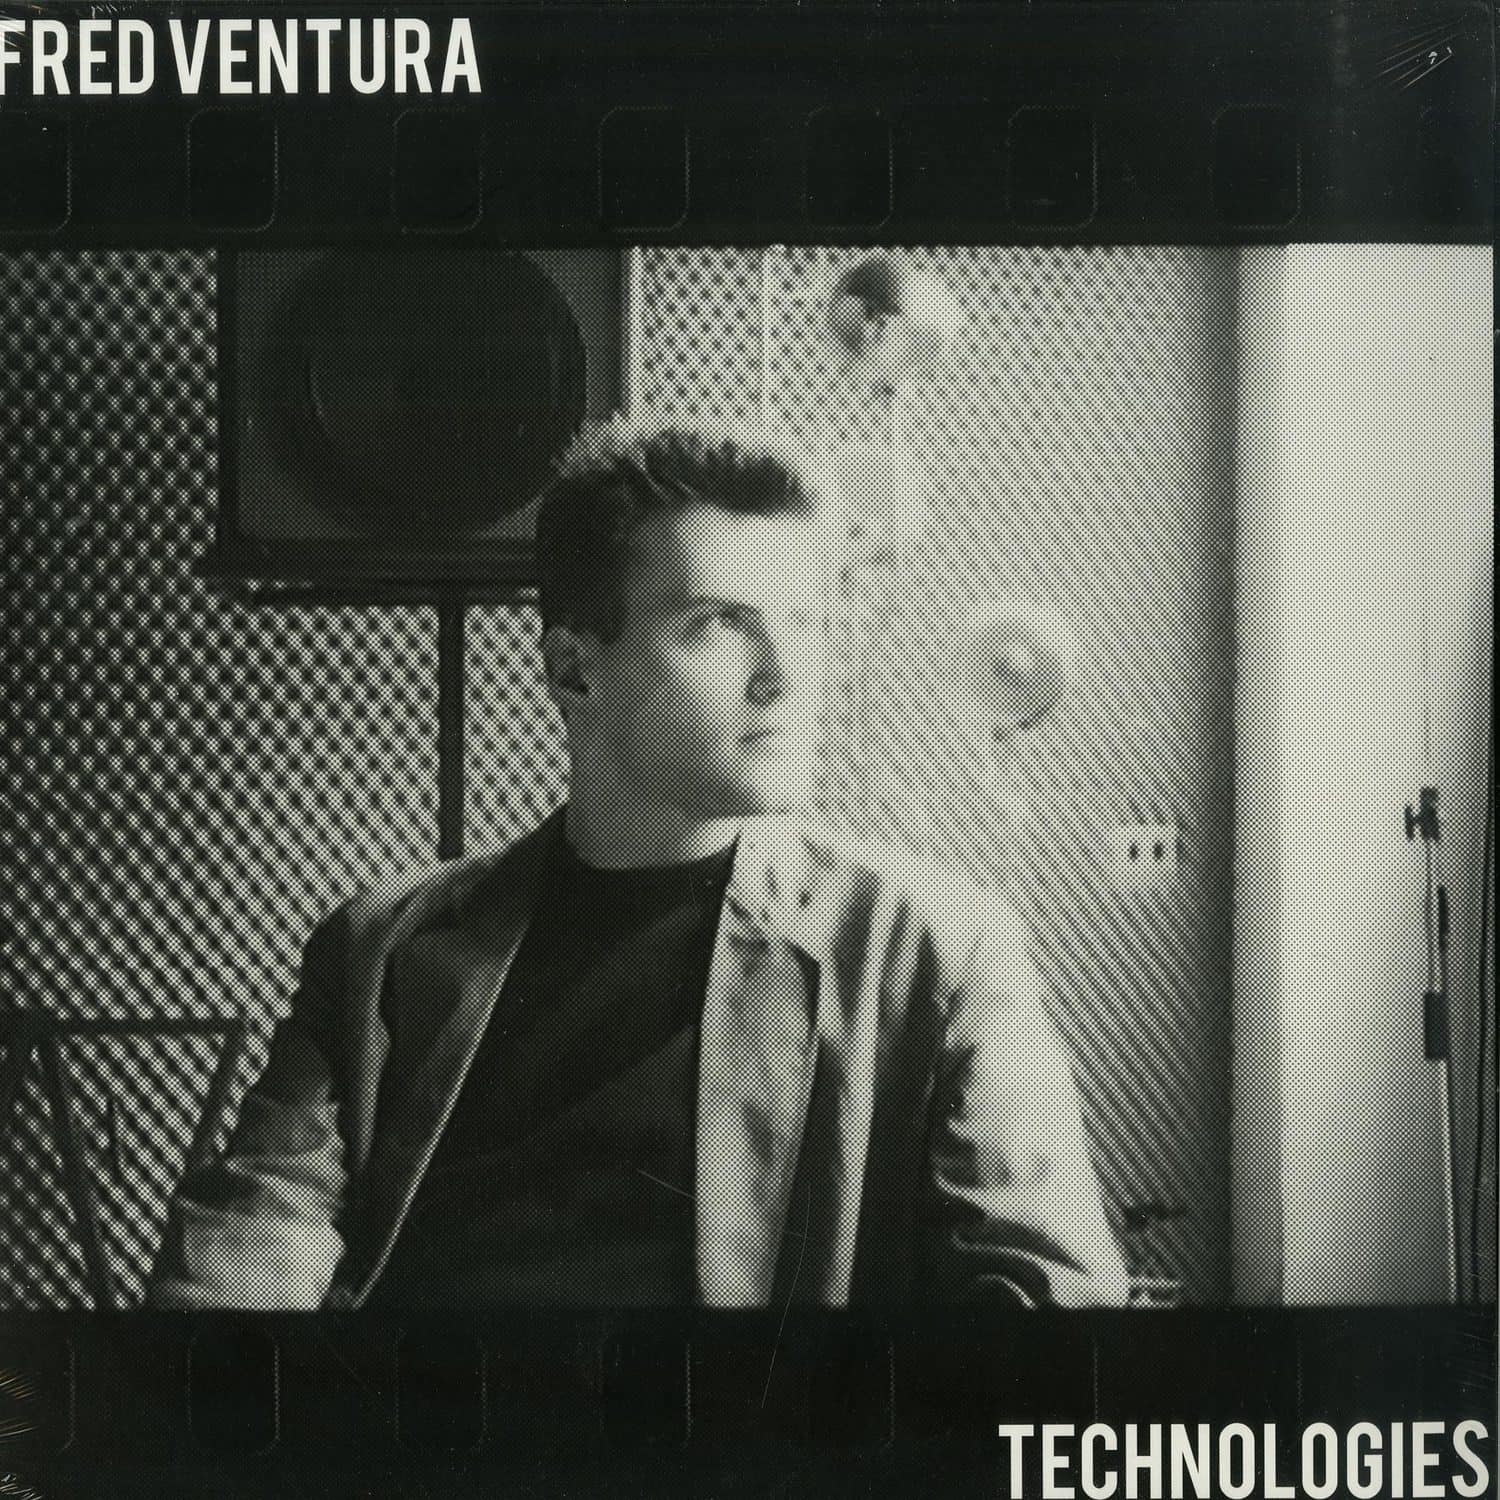 Fred Ventura - TECHNOLOGIES